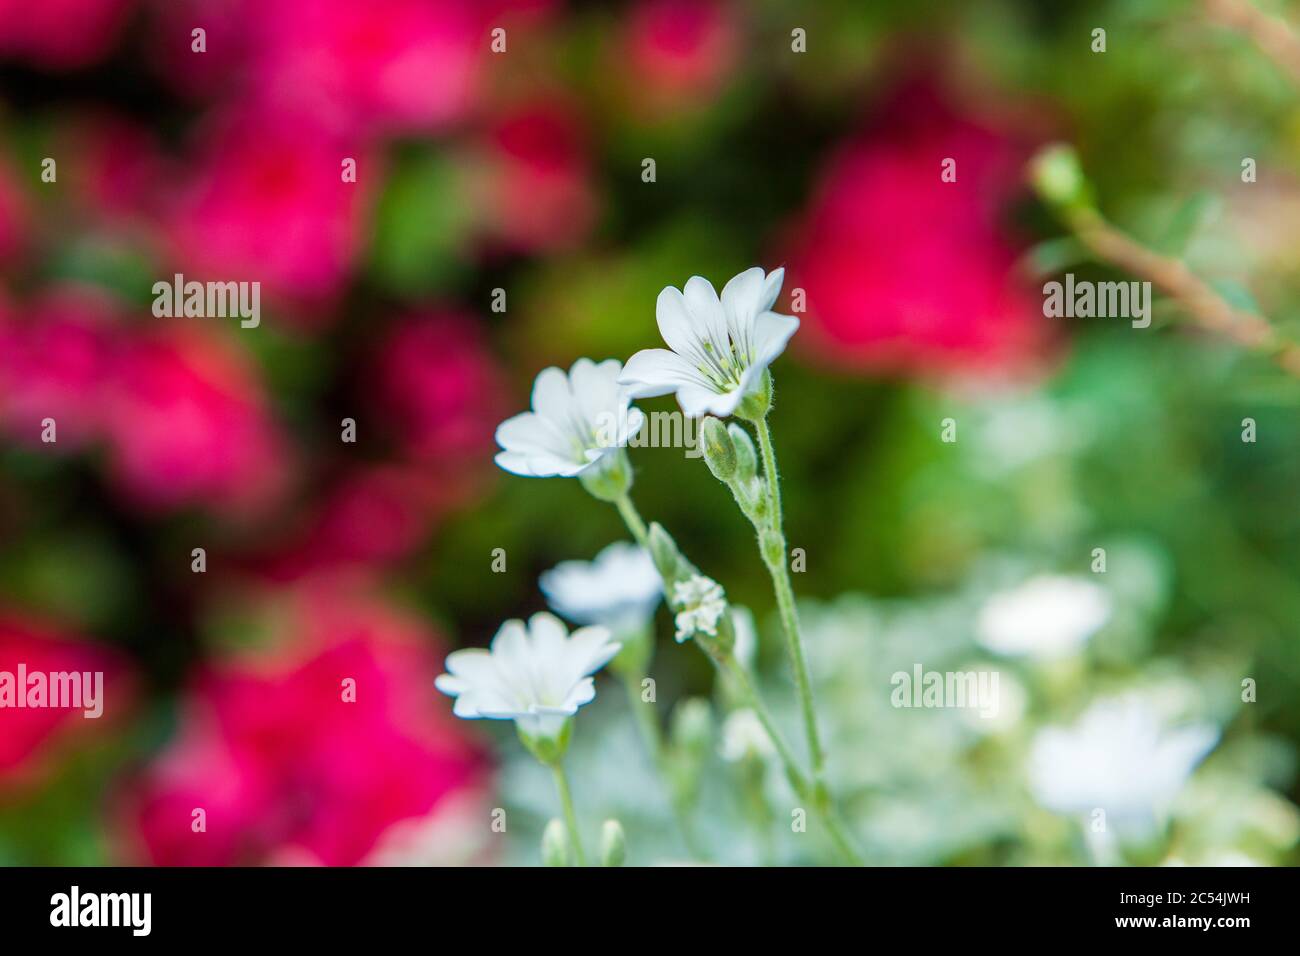 Flower of Cerastium tomentosum (snow-in-summer) with red azalea flowers in background Stock Photo